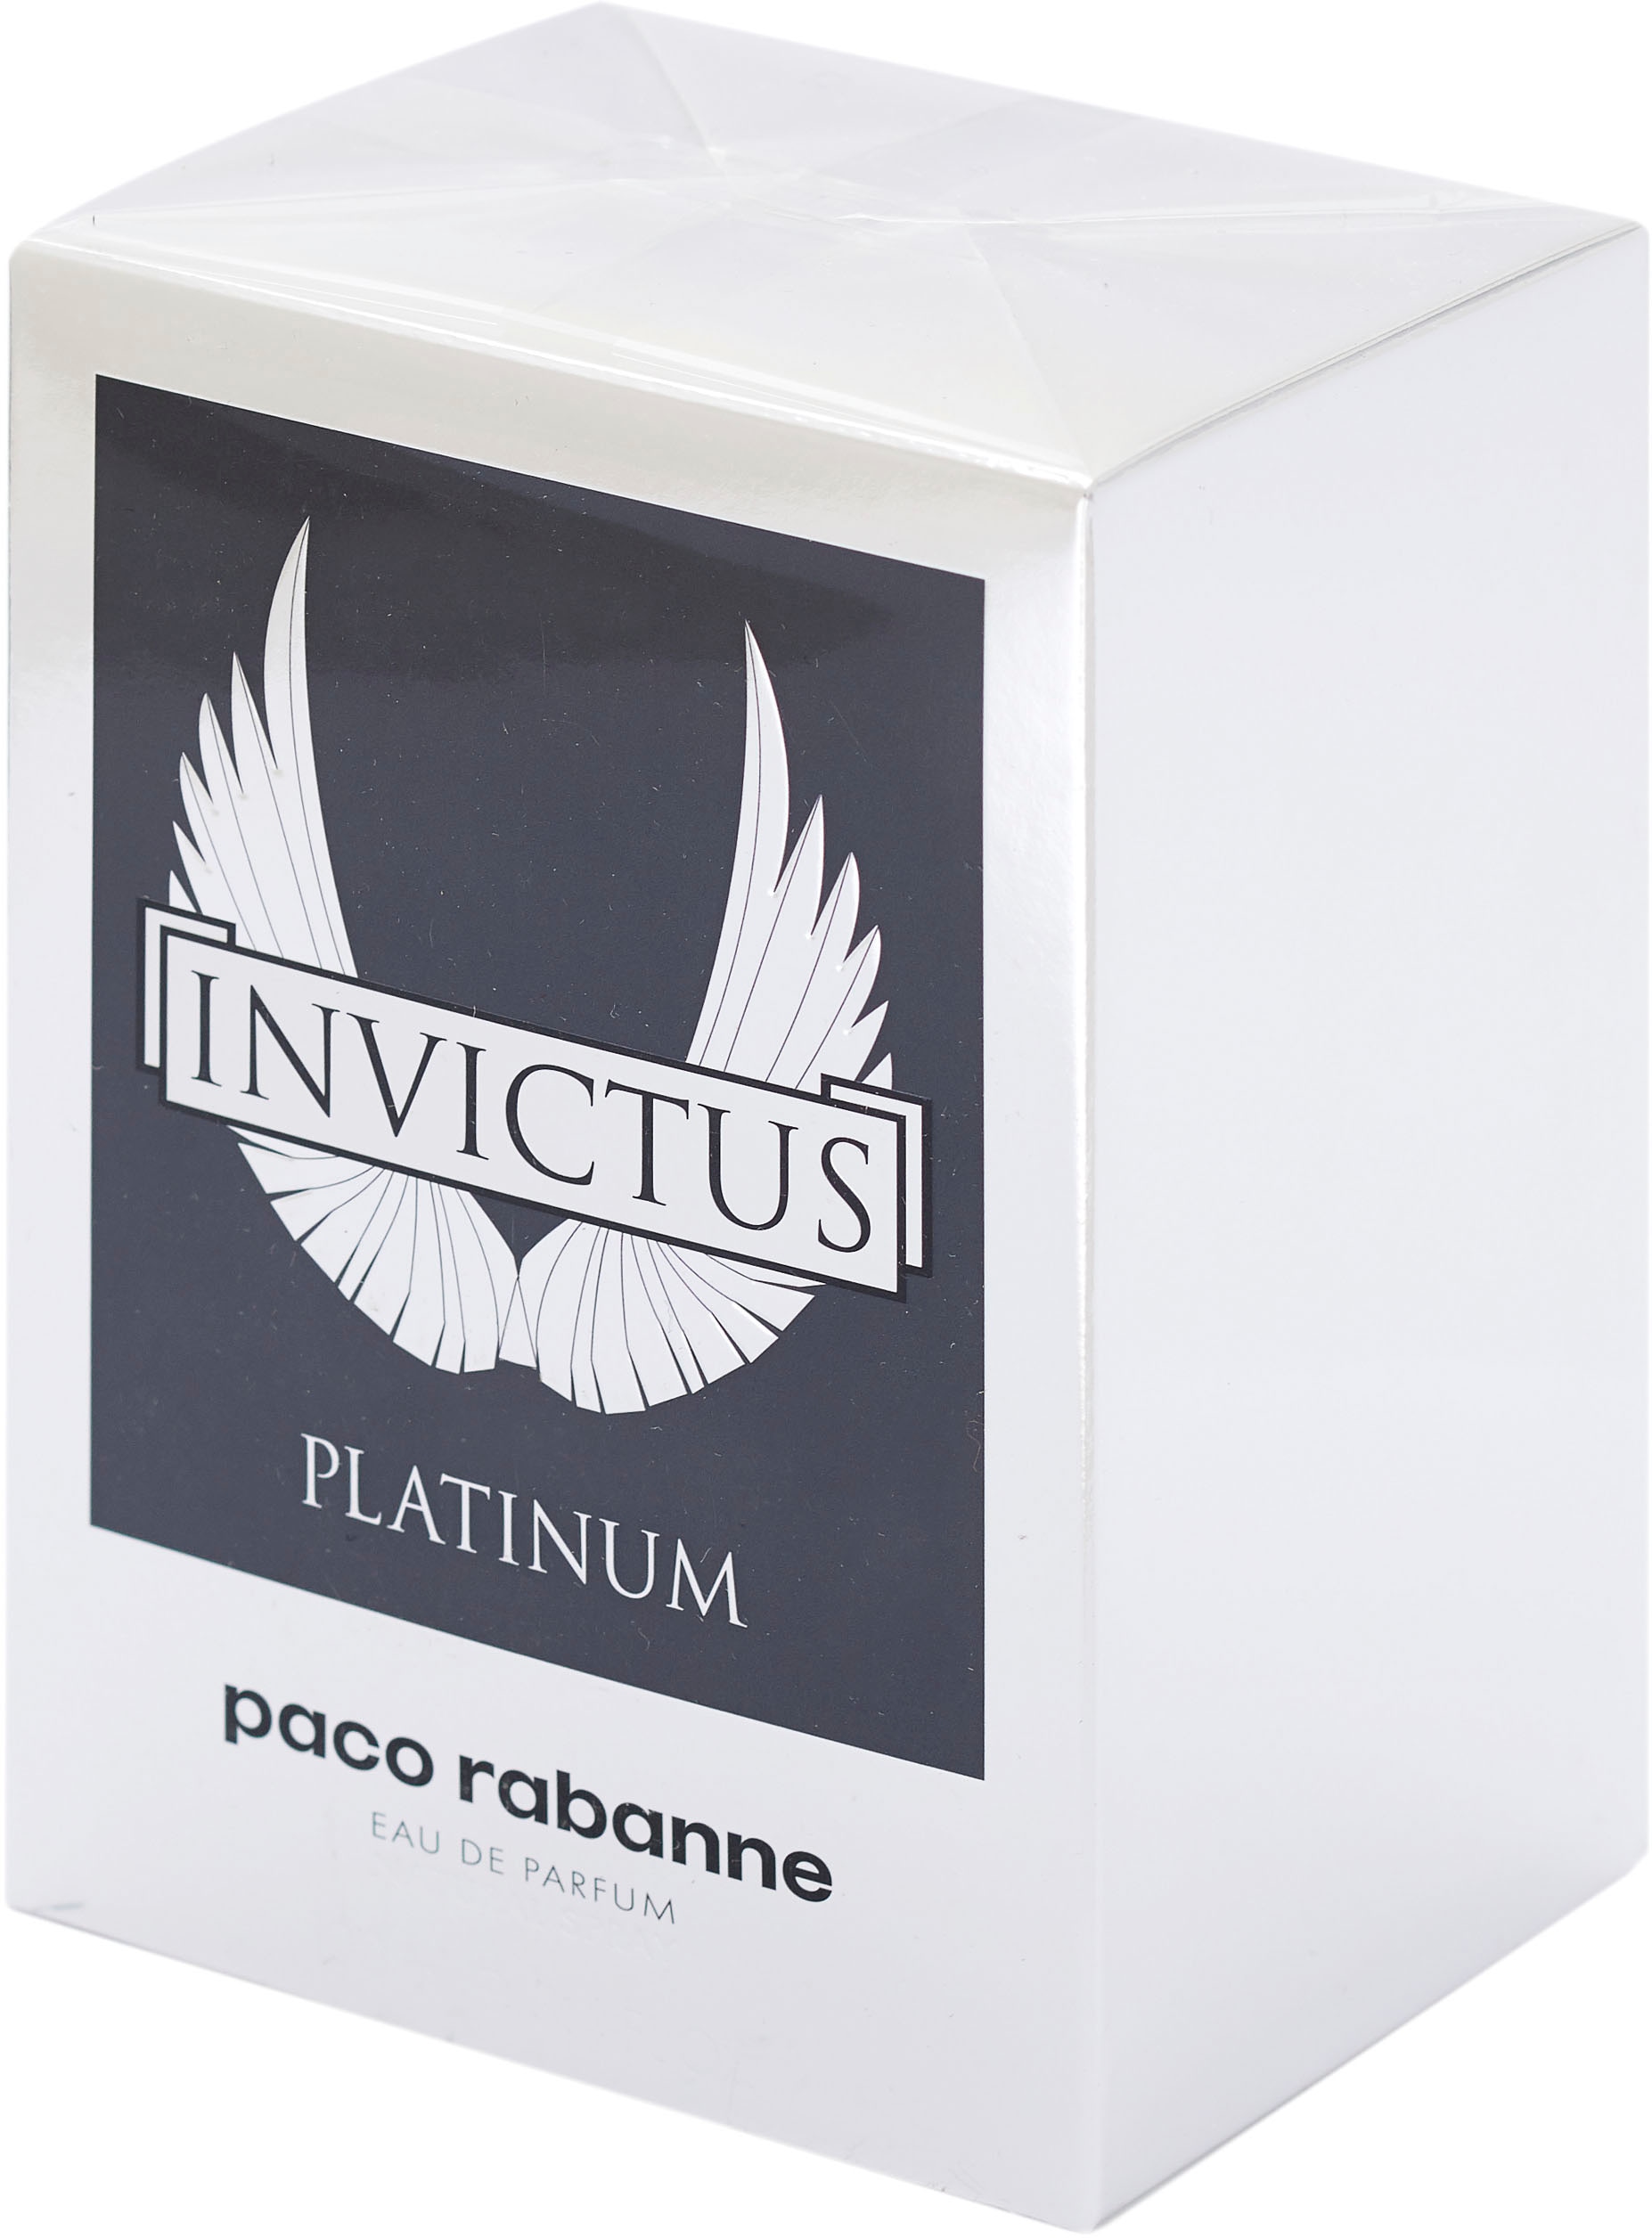 Platinum« de rabanne BAUR »Invictus Parfum Eau paco |